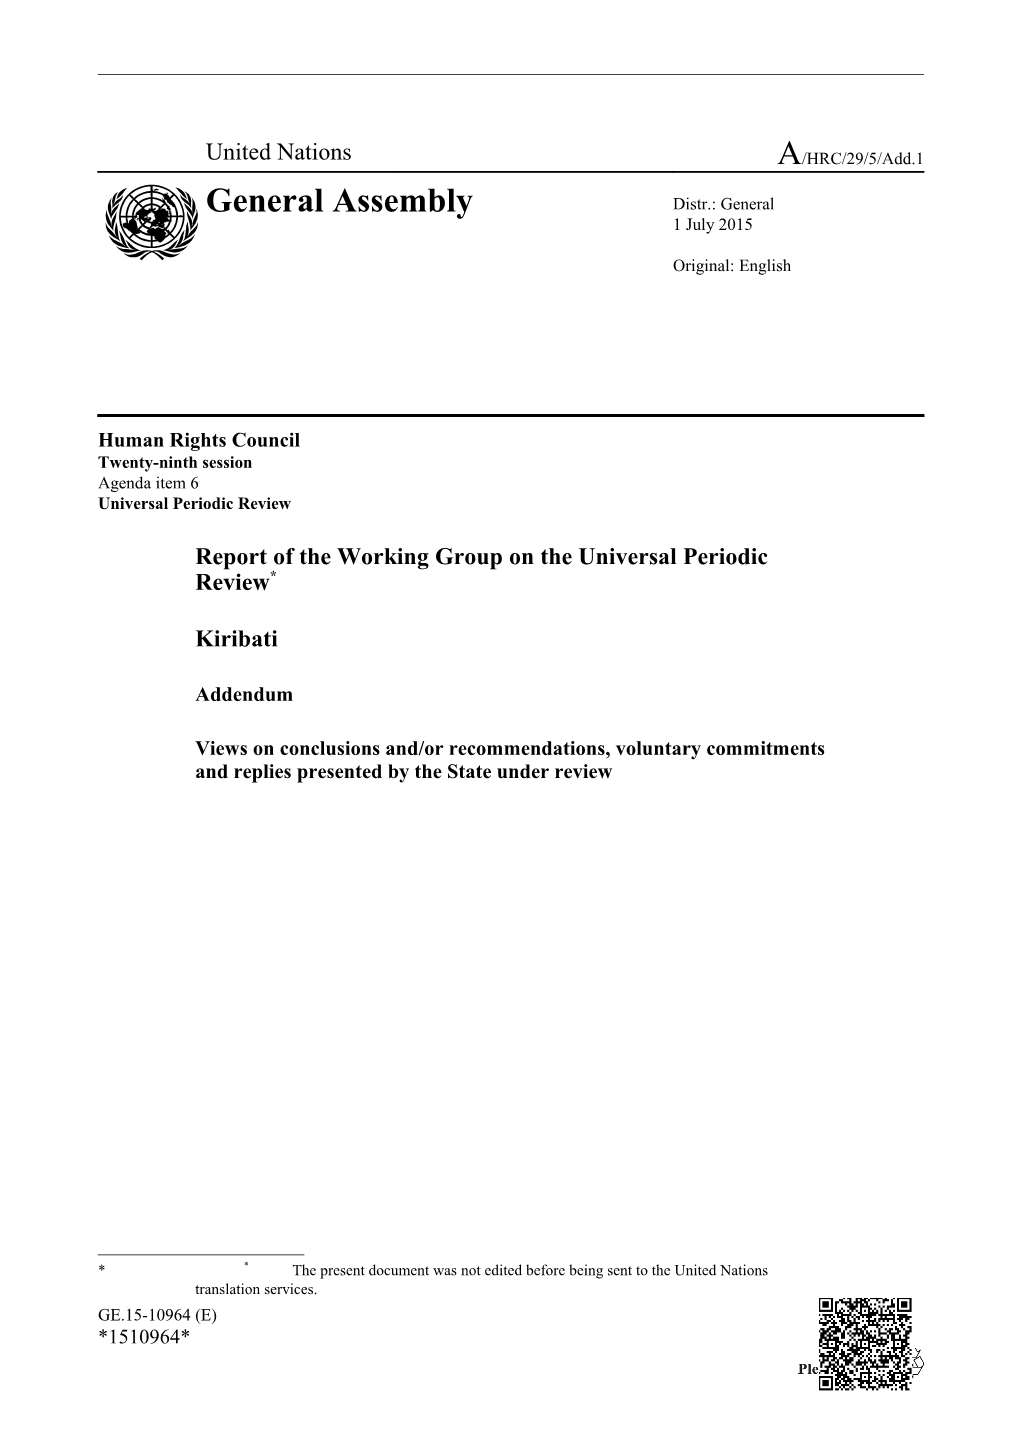 A/HRC/29/5/Add.1 Addendum of the WG Report of Kiribati in English